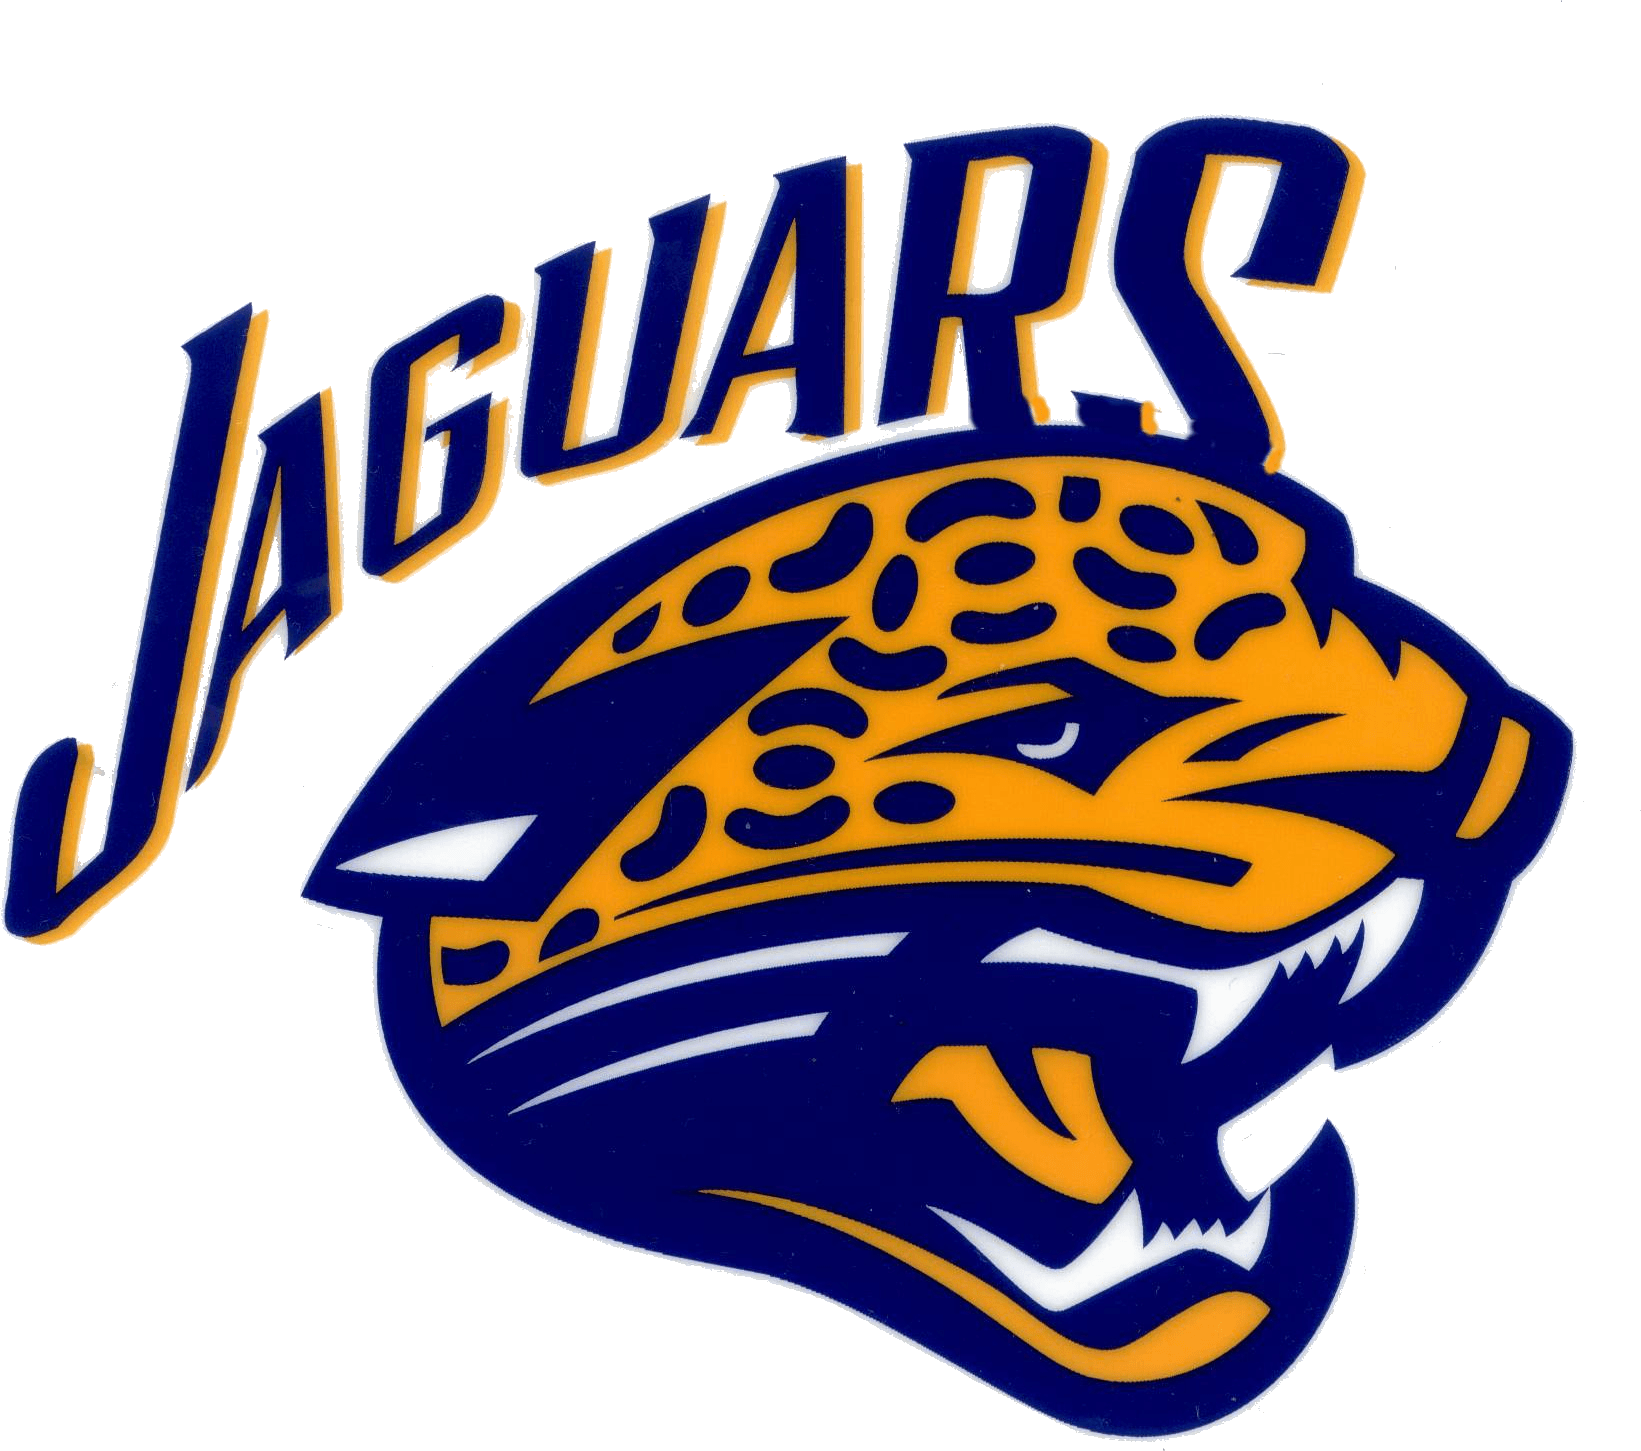 Jaguar Soccer Logo - Seckman - Team Home Seckman Jaguars Sports